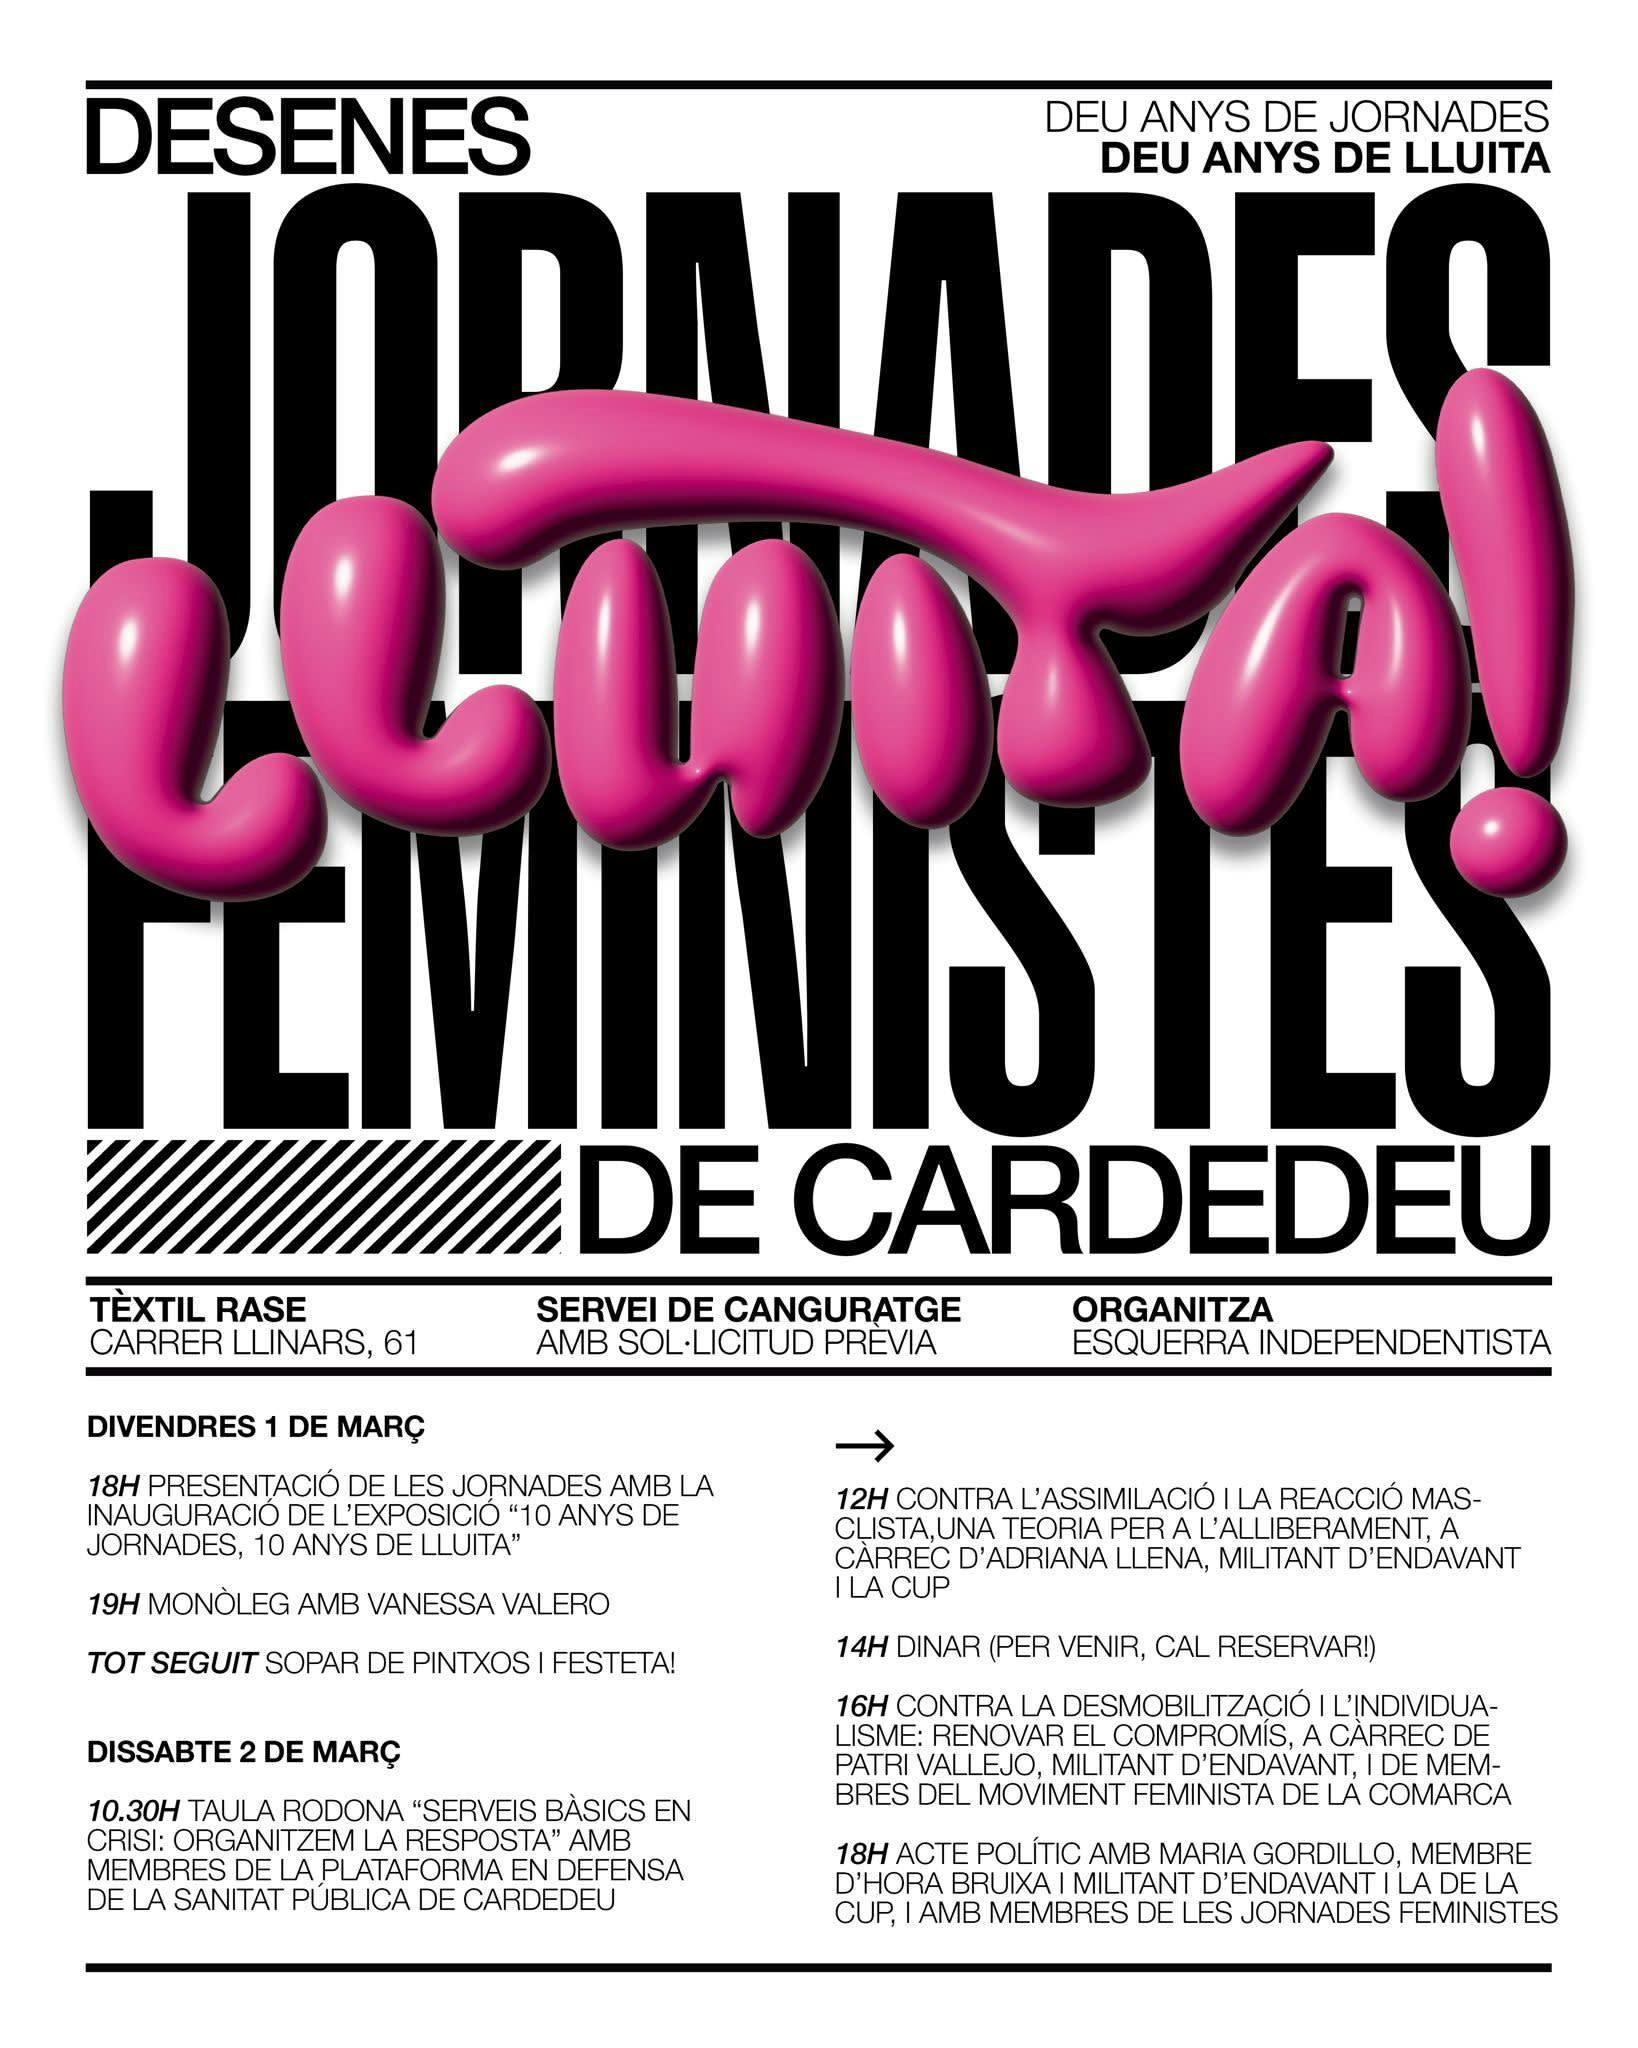 X Jornades Feministes de Cardedeu